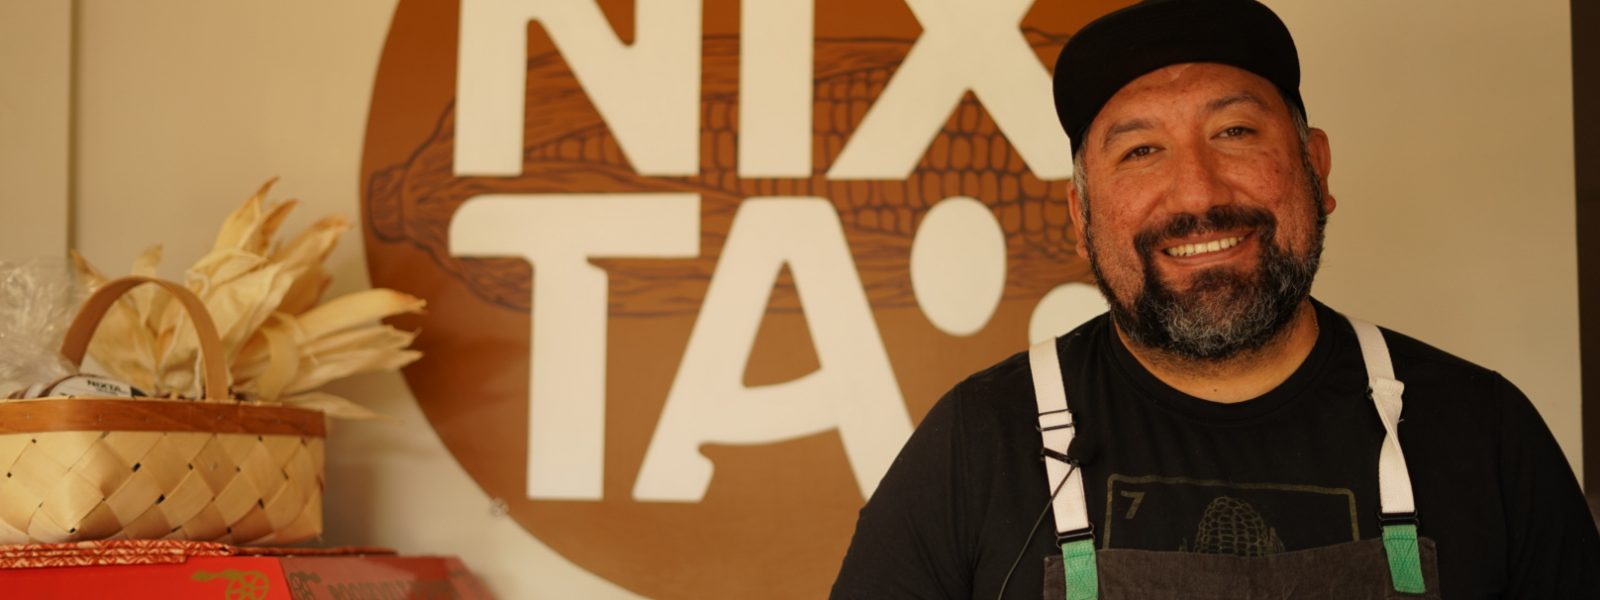 Gustavo in front of Nixta logo, smiling